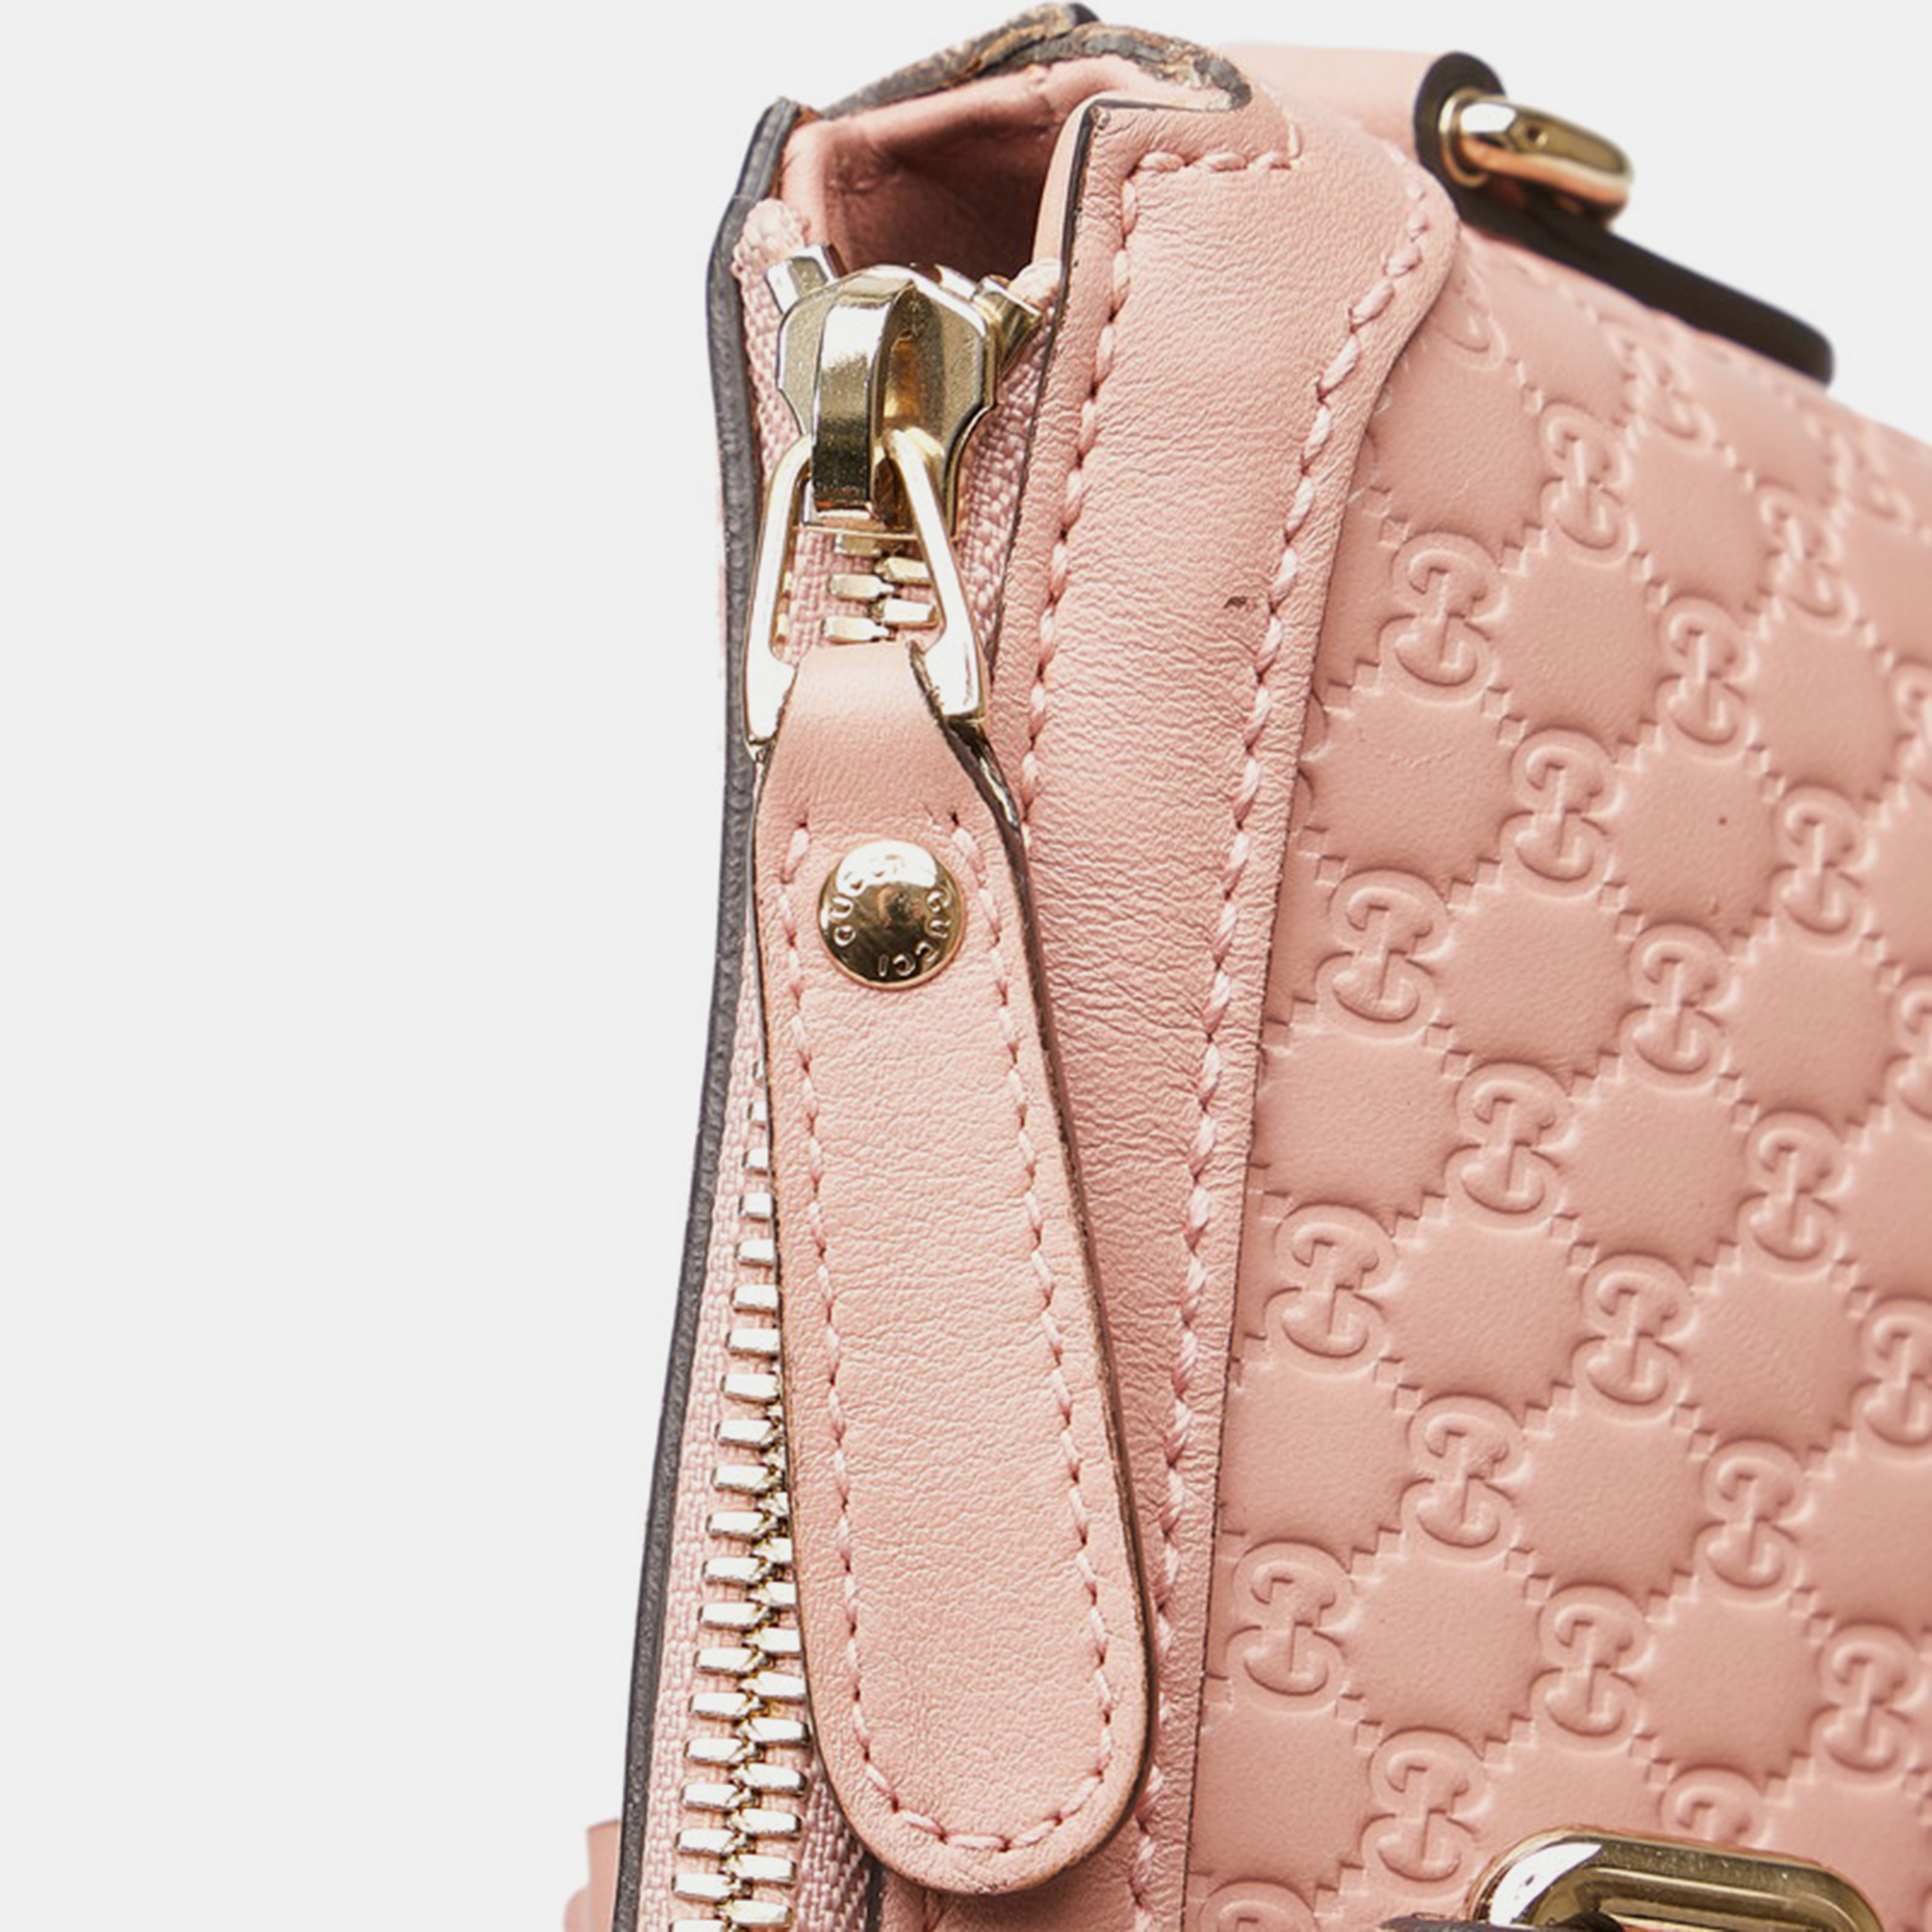 Gucci Pink Microguccissima Leather Handle Bag